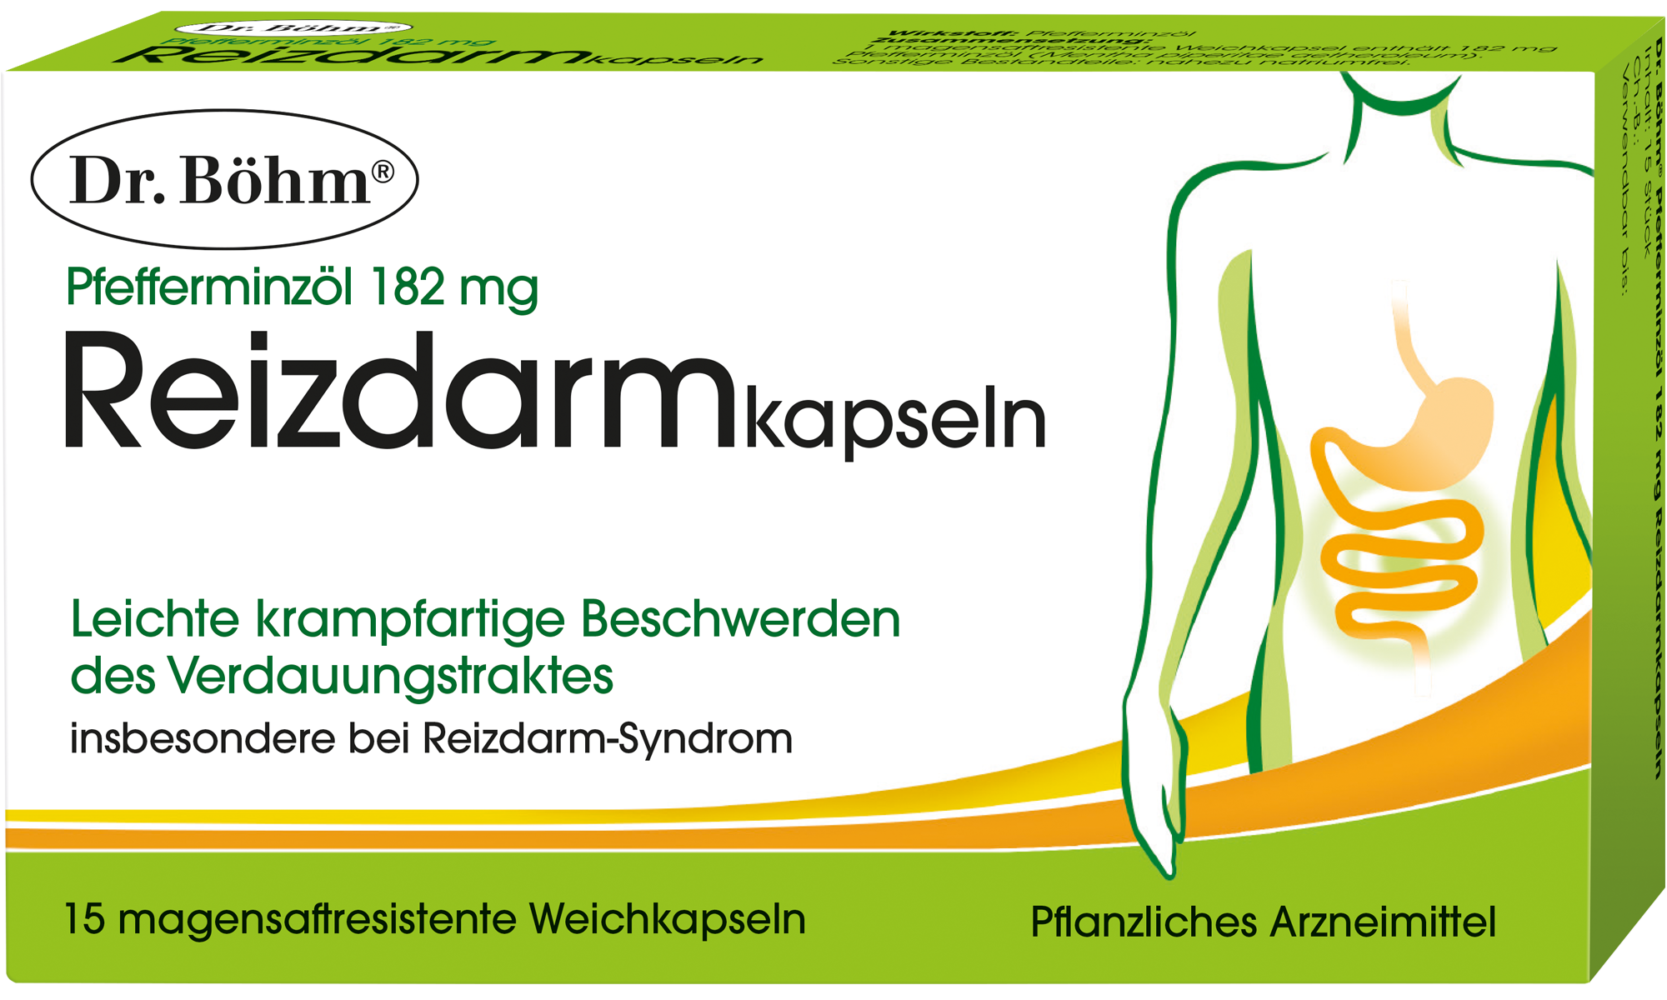 Dr. Böhm® Reizdarmkapseln, Pfefferminzöl 182 mg, Pflanzliches Arzneimittel